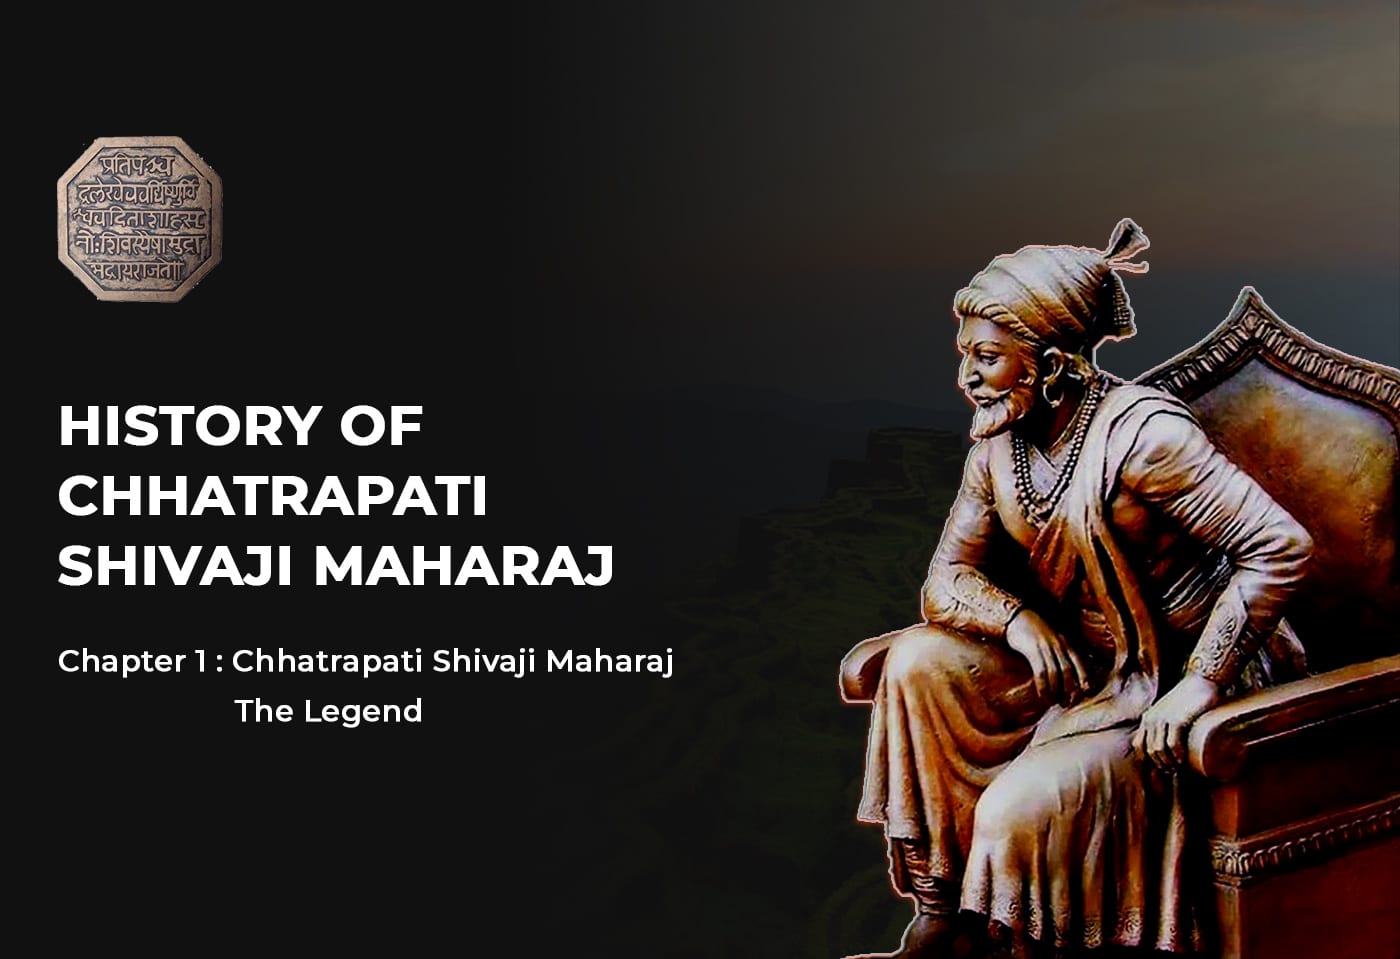 HISTOIRE DE CHHATRAPATI SHIVAJI MAHARAJ - Chapitre 1 Chhatrapati Shivaji Maharaj The Legend - HinduFAQs